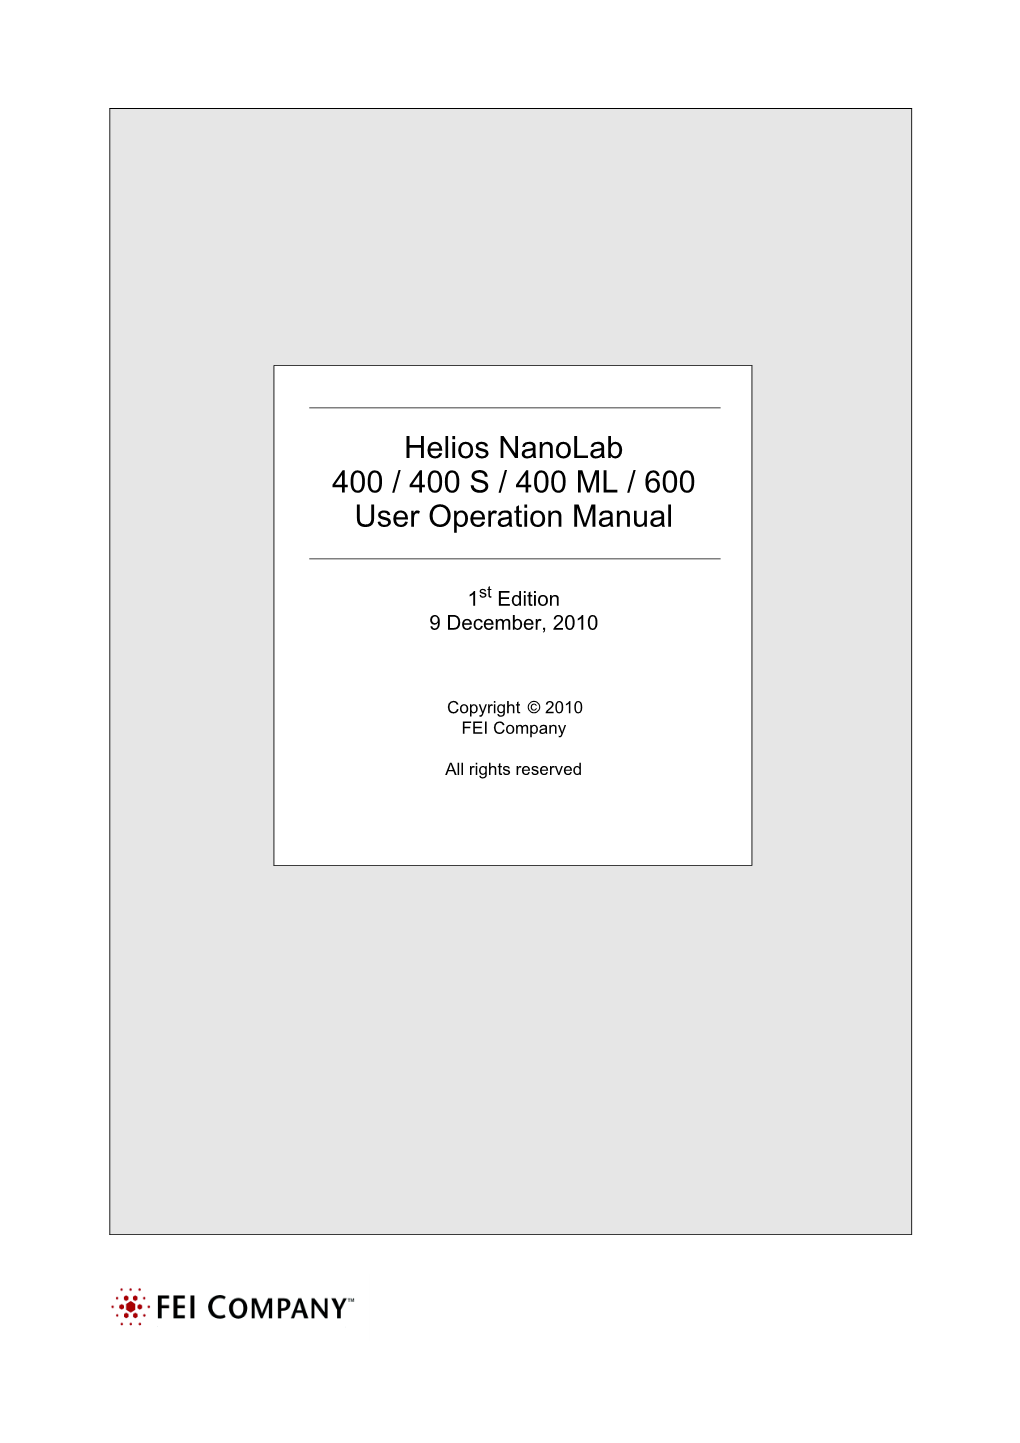 Helios Nanolab 400 / 400S / 400ML / 600 User Operation Manual